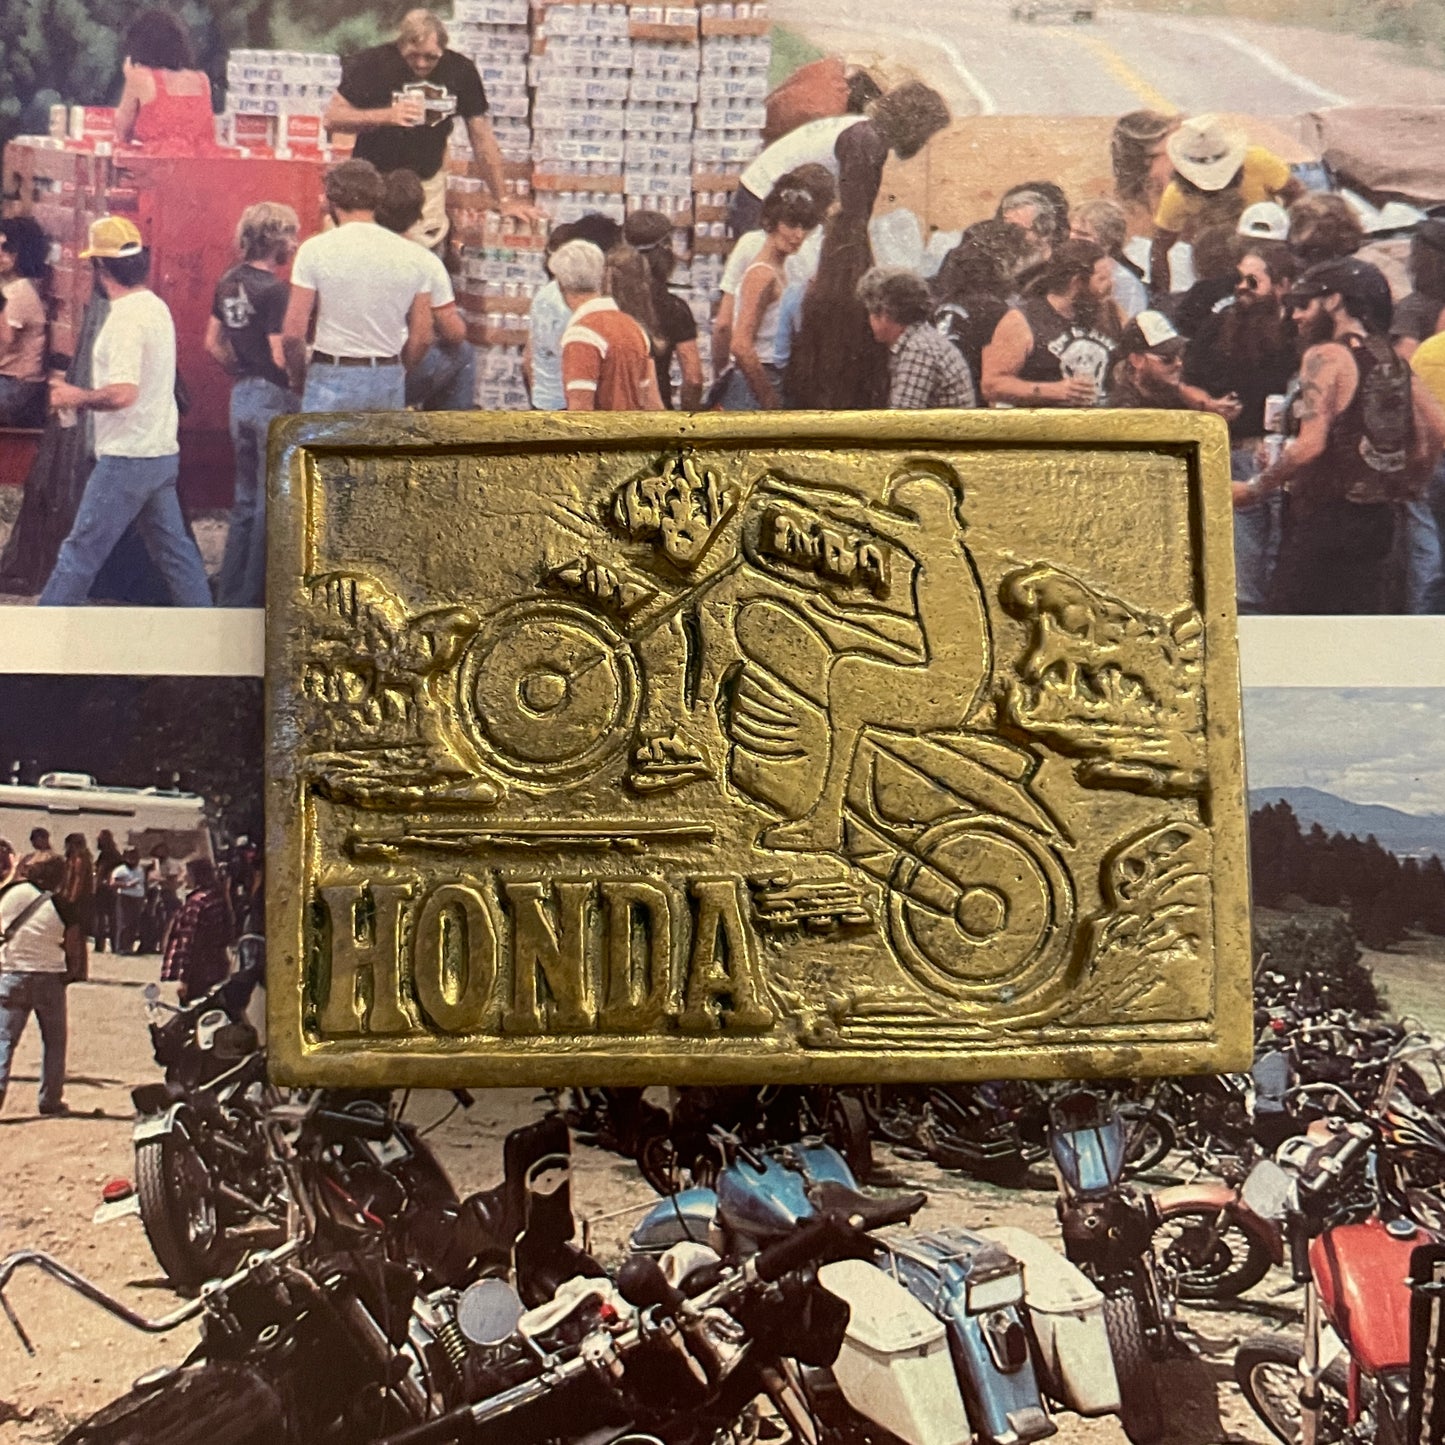 Honda Dirtbike Buckle [1970s]